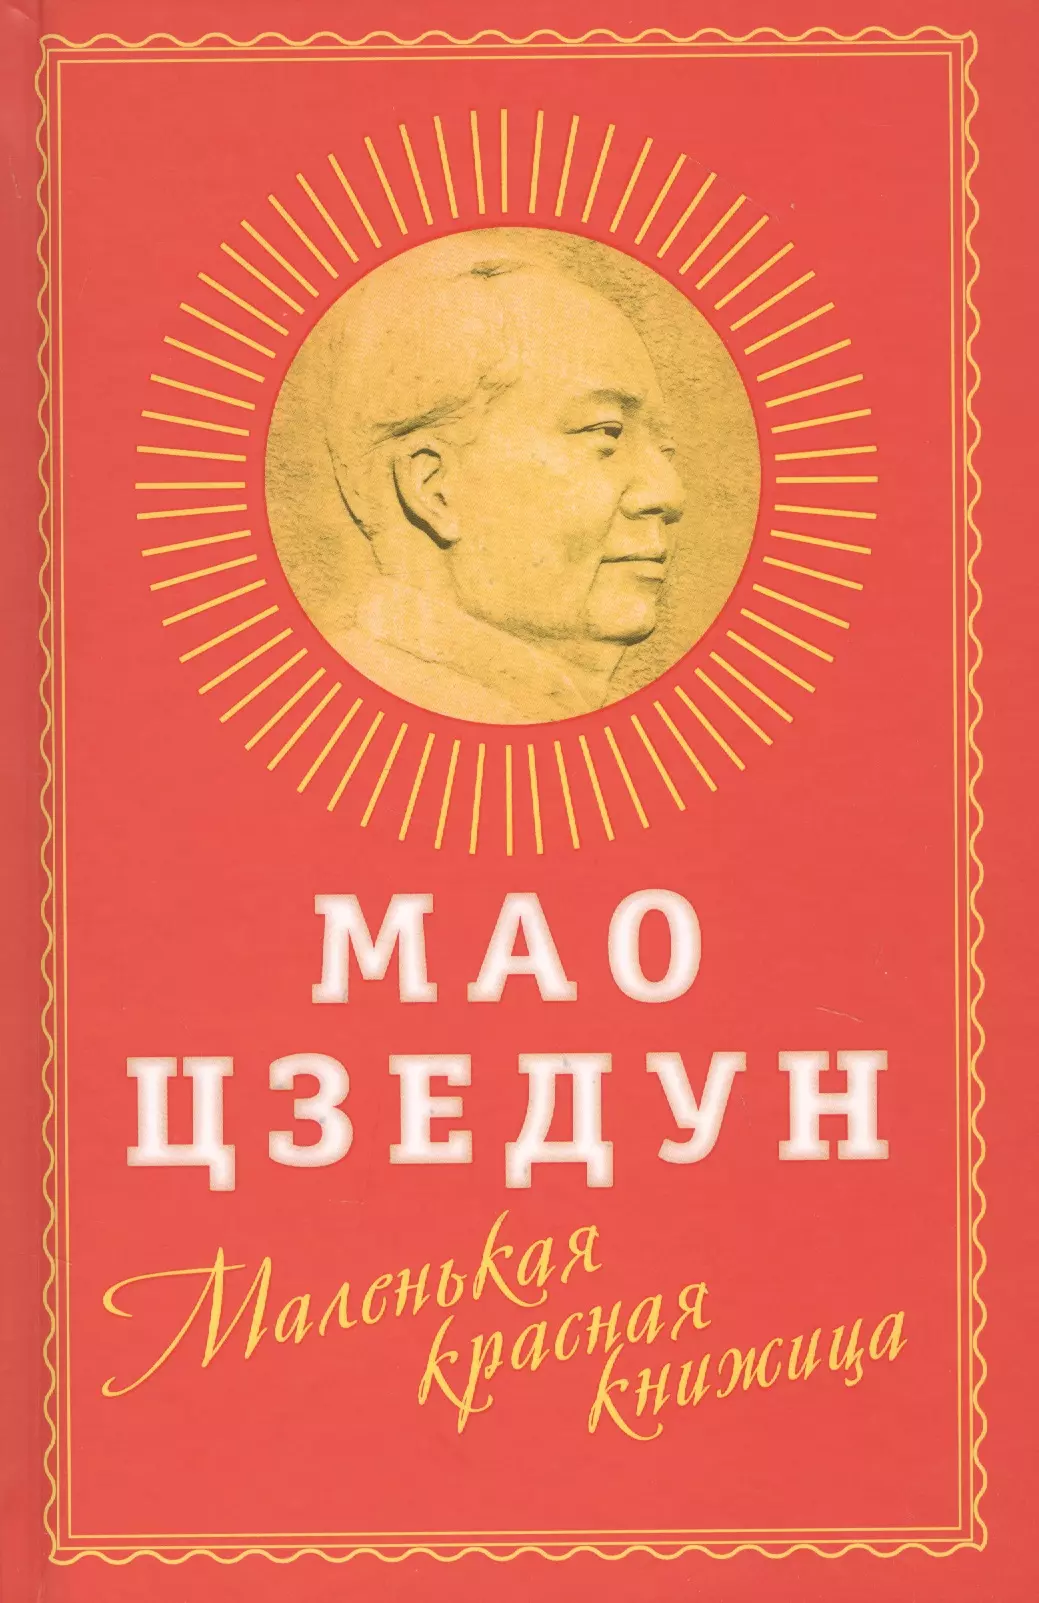 Мао Цзэдун Маленькая красная книжица